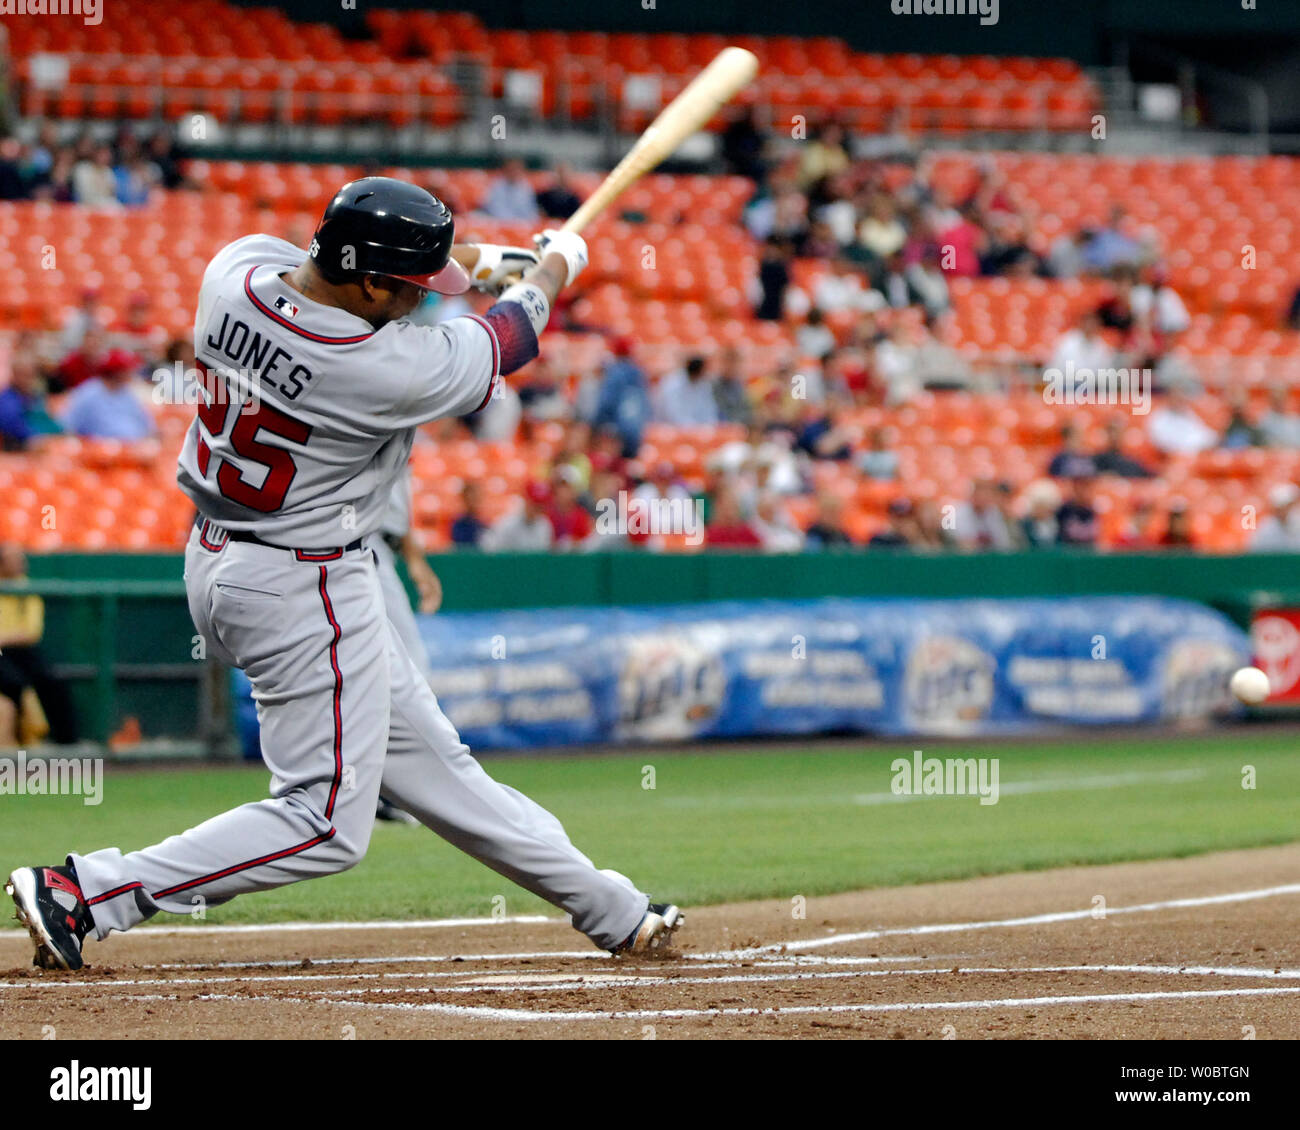 Encore Select 320-61 MLB Atlanta Braves Chipper Jones 3-Photo Frame,  15-Inch by 35-Inch